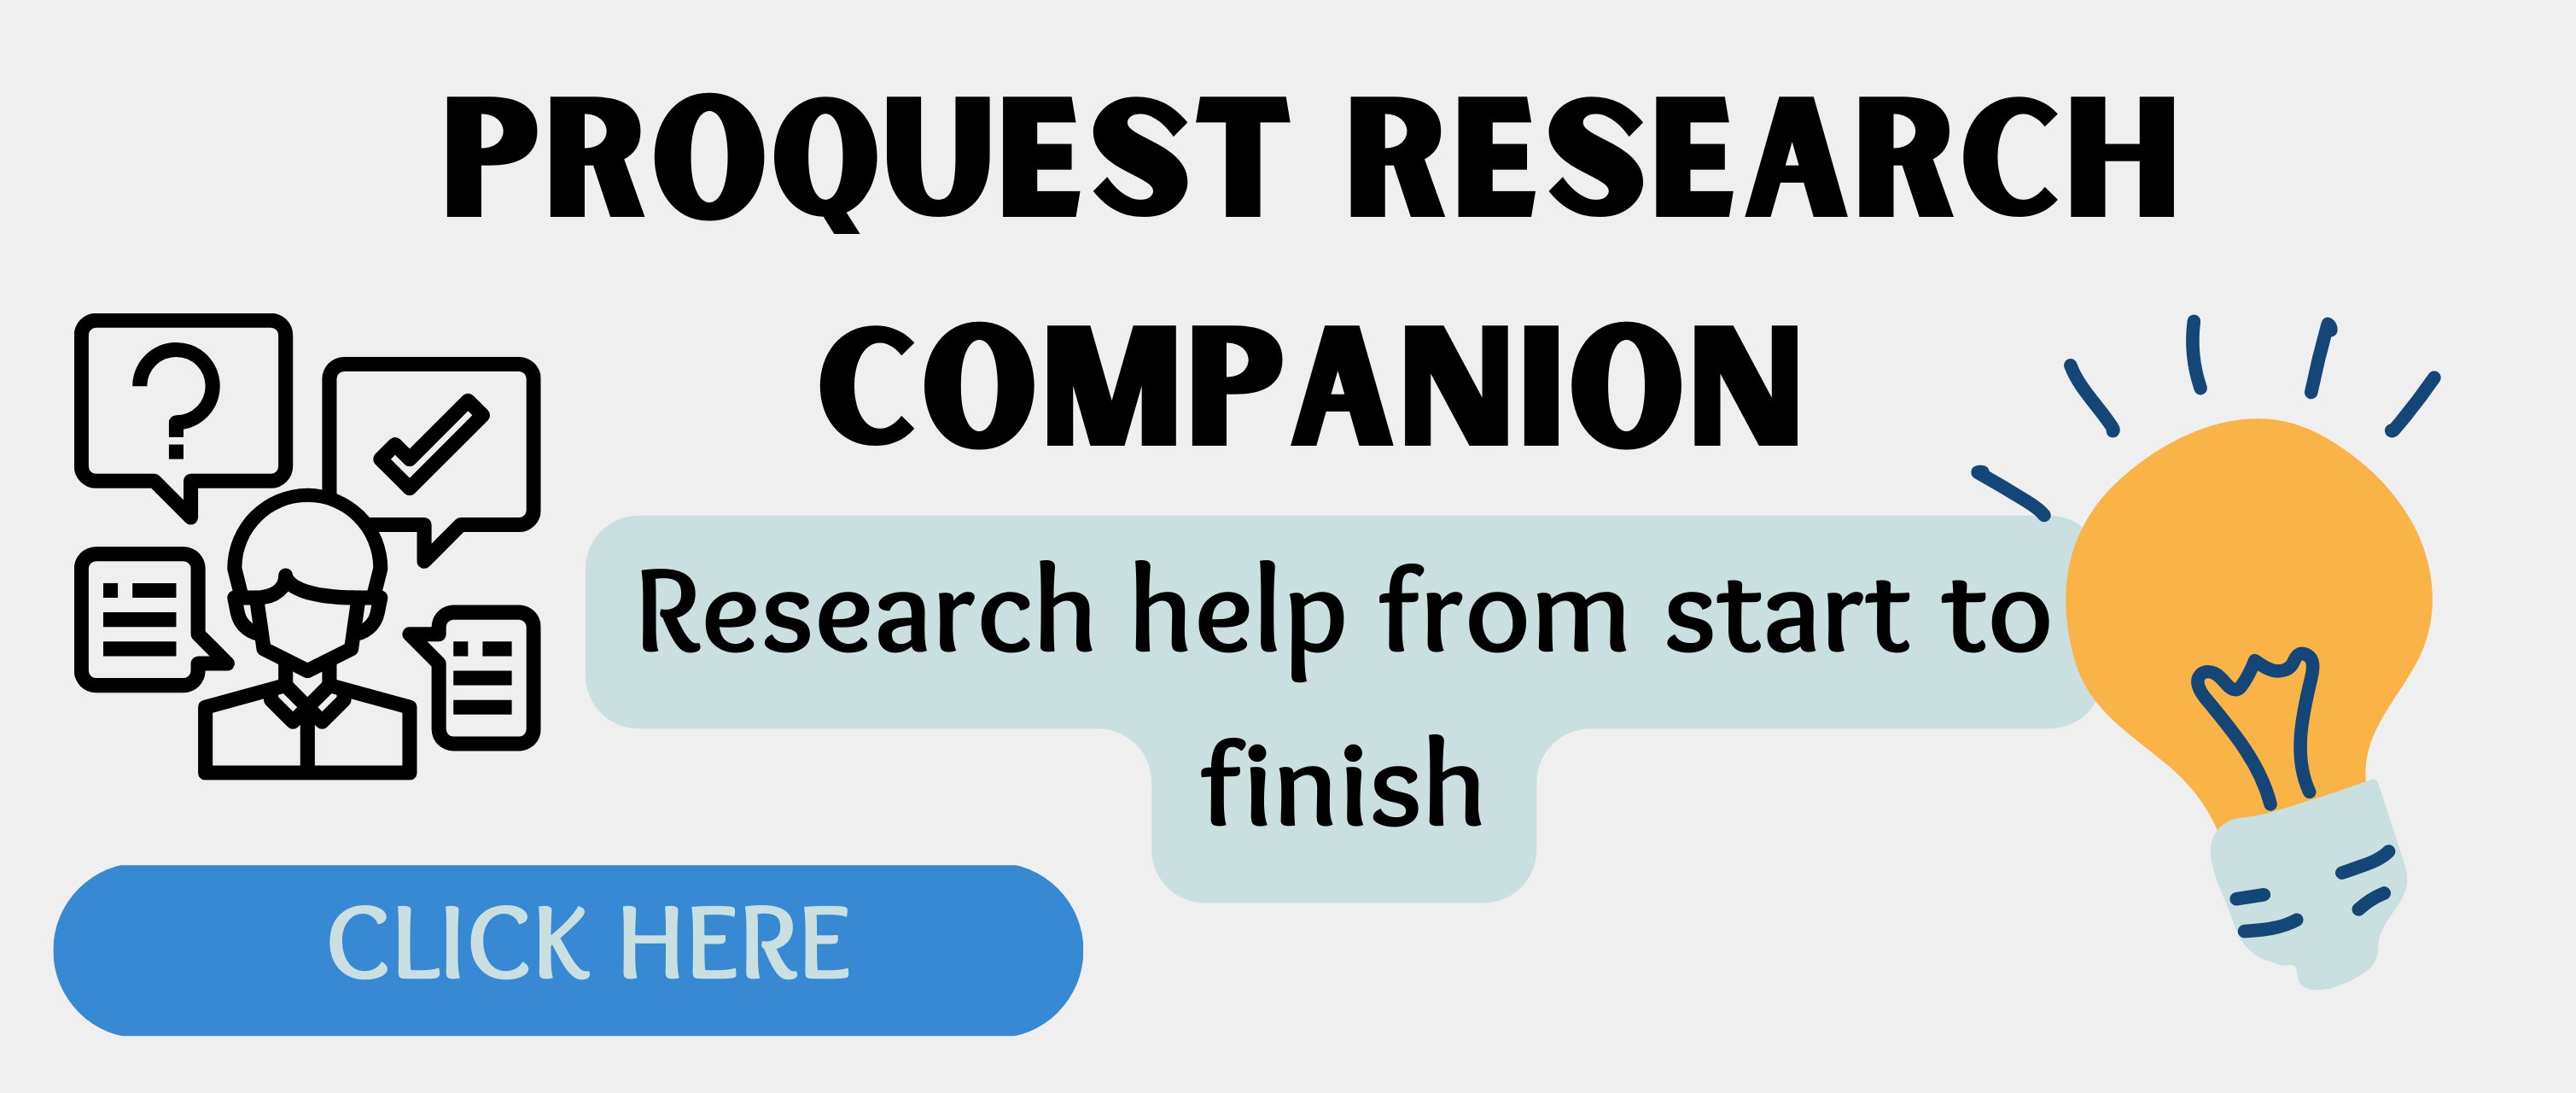 Proquest Research Companion